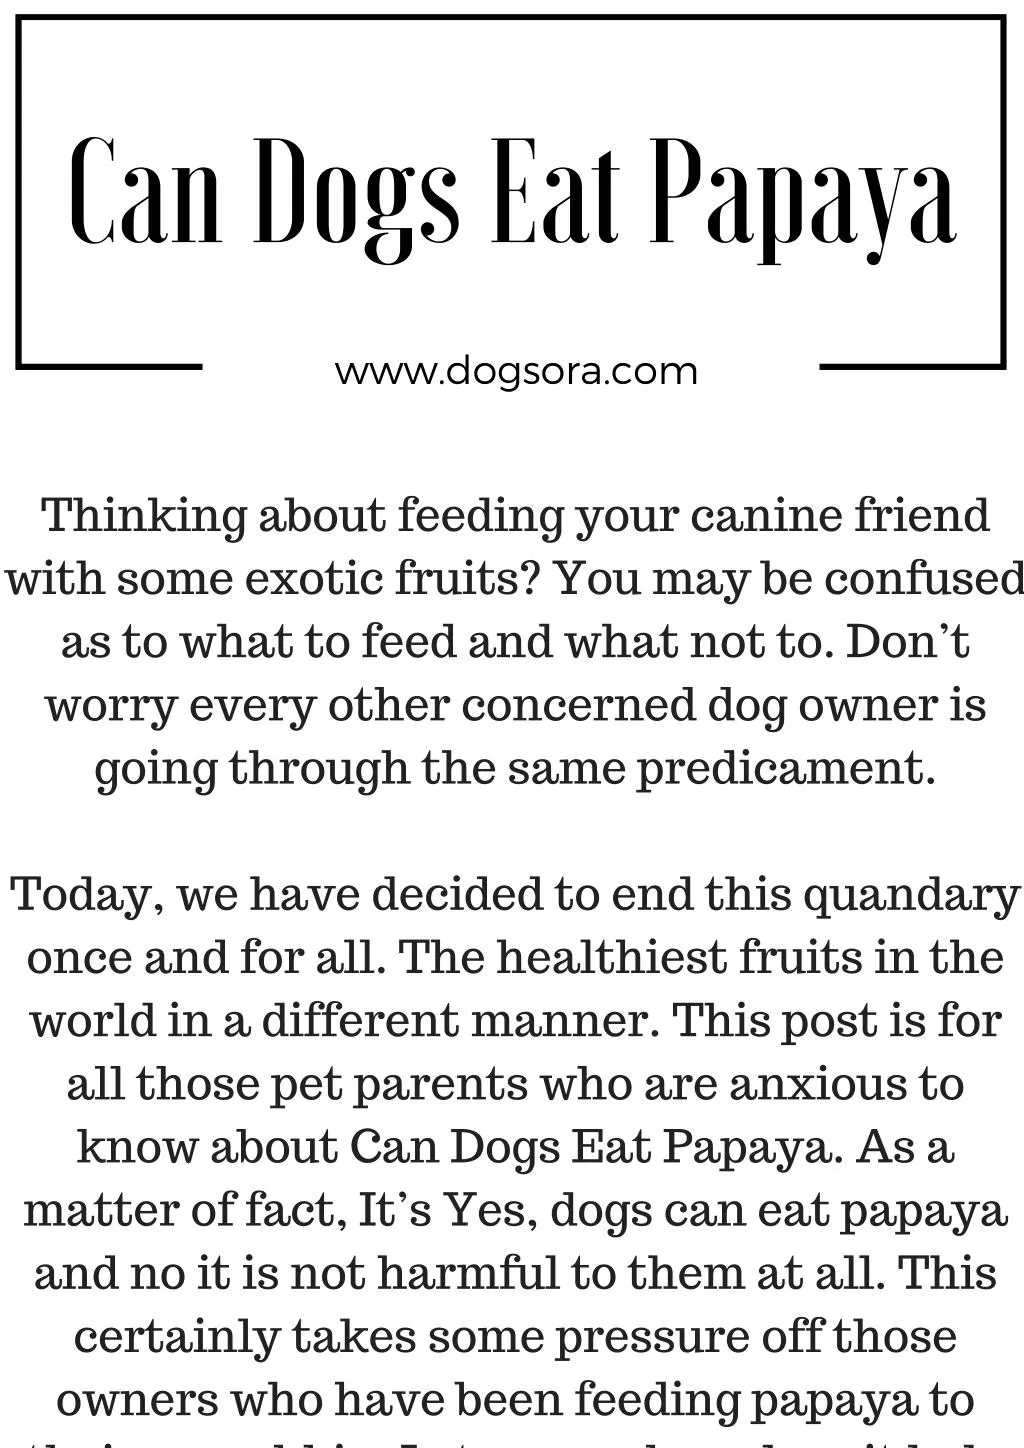 can dogs ea t papaya